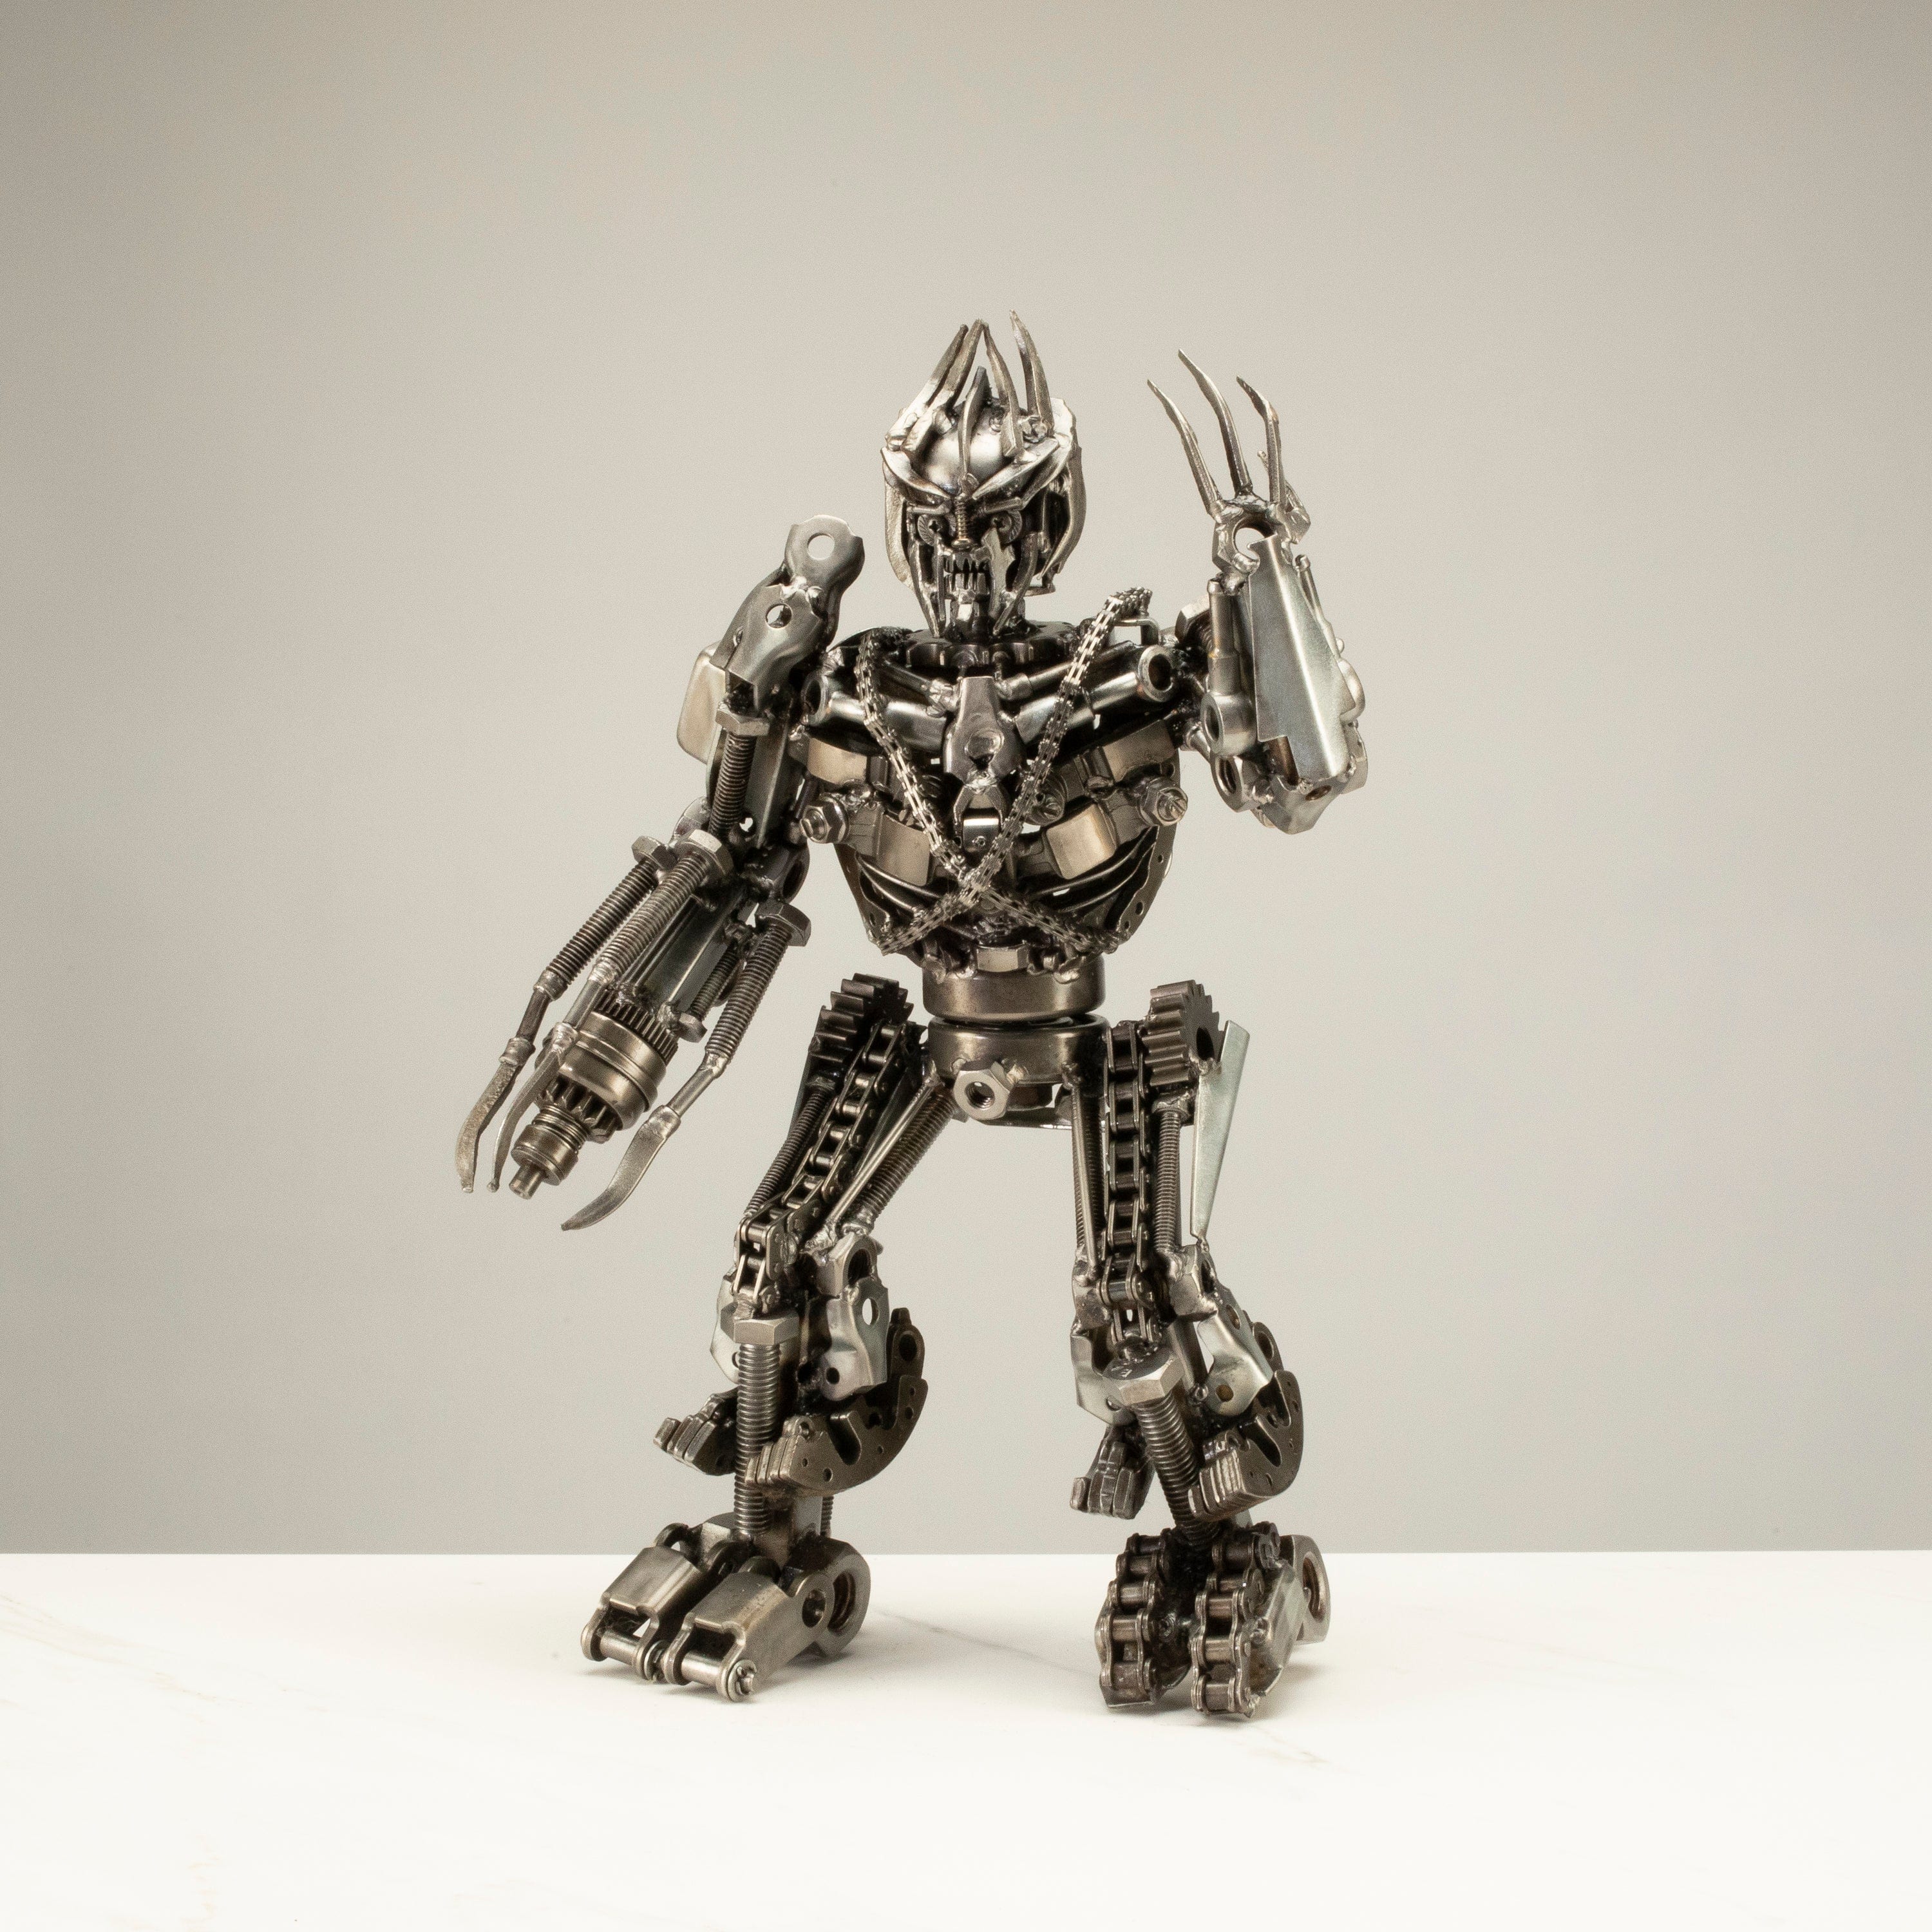 Kalifano Recycled Metal Art 16" Megatron Inspired Recycled Metal Art Sculpture RMS-MEG41-S